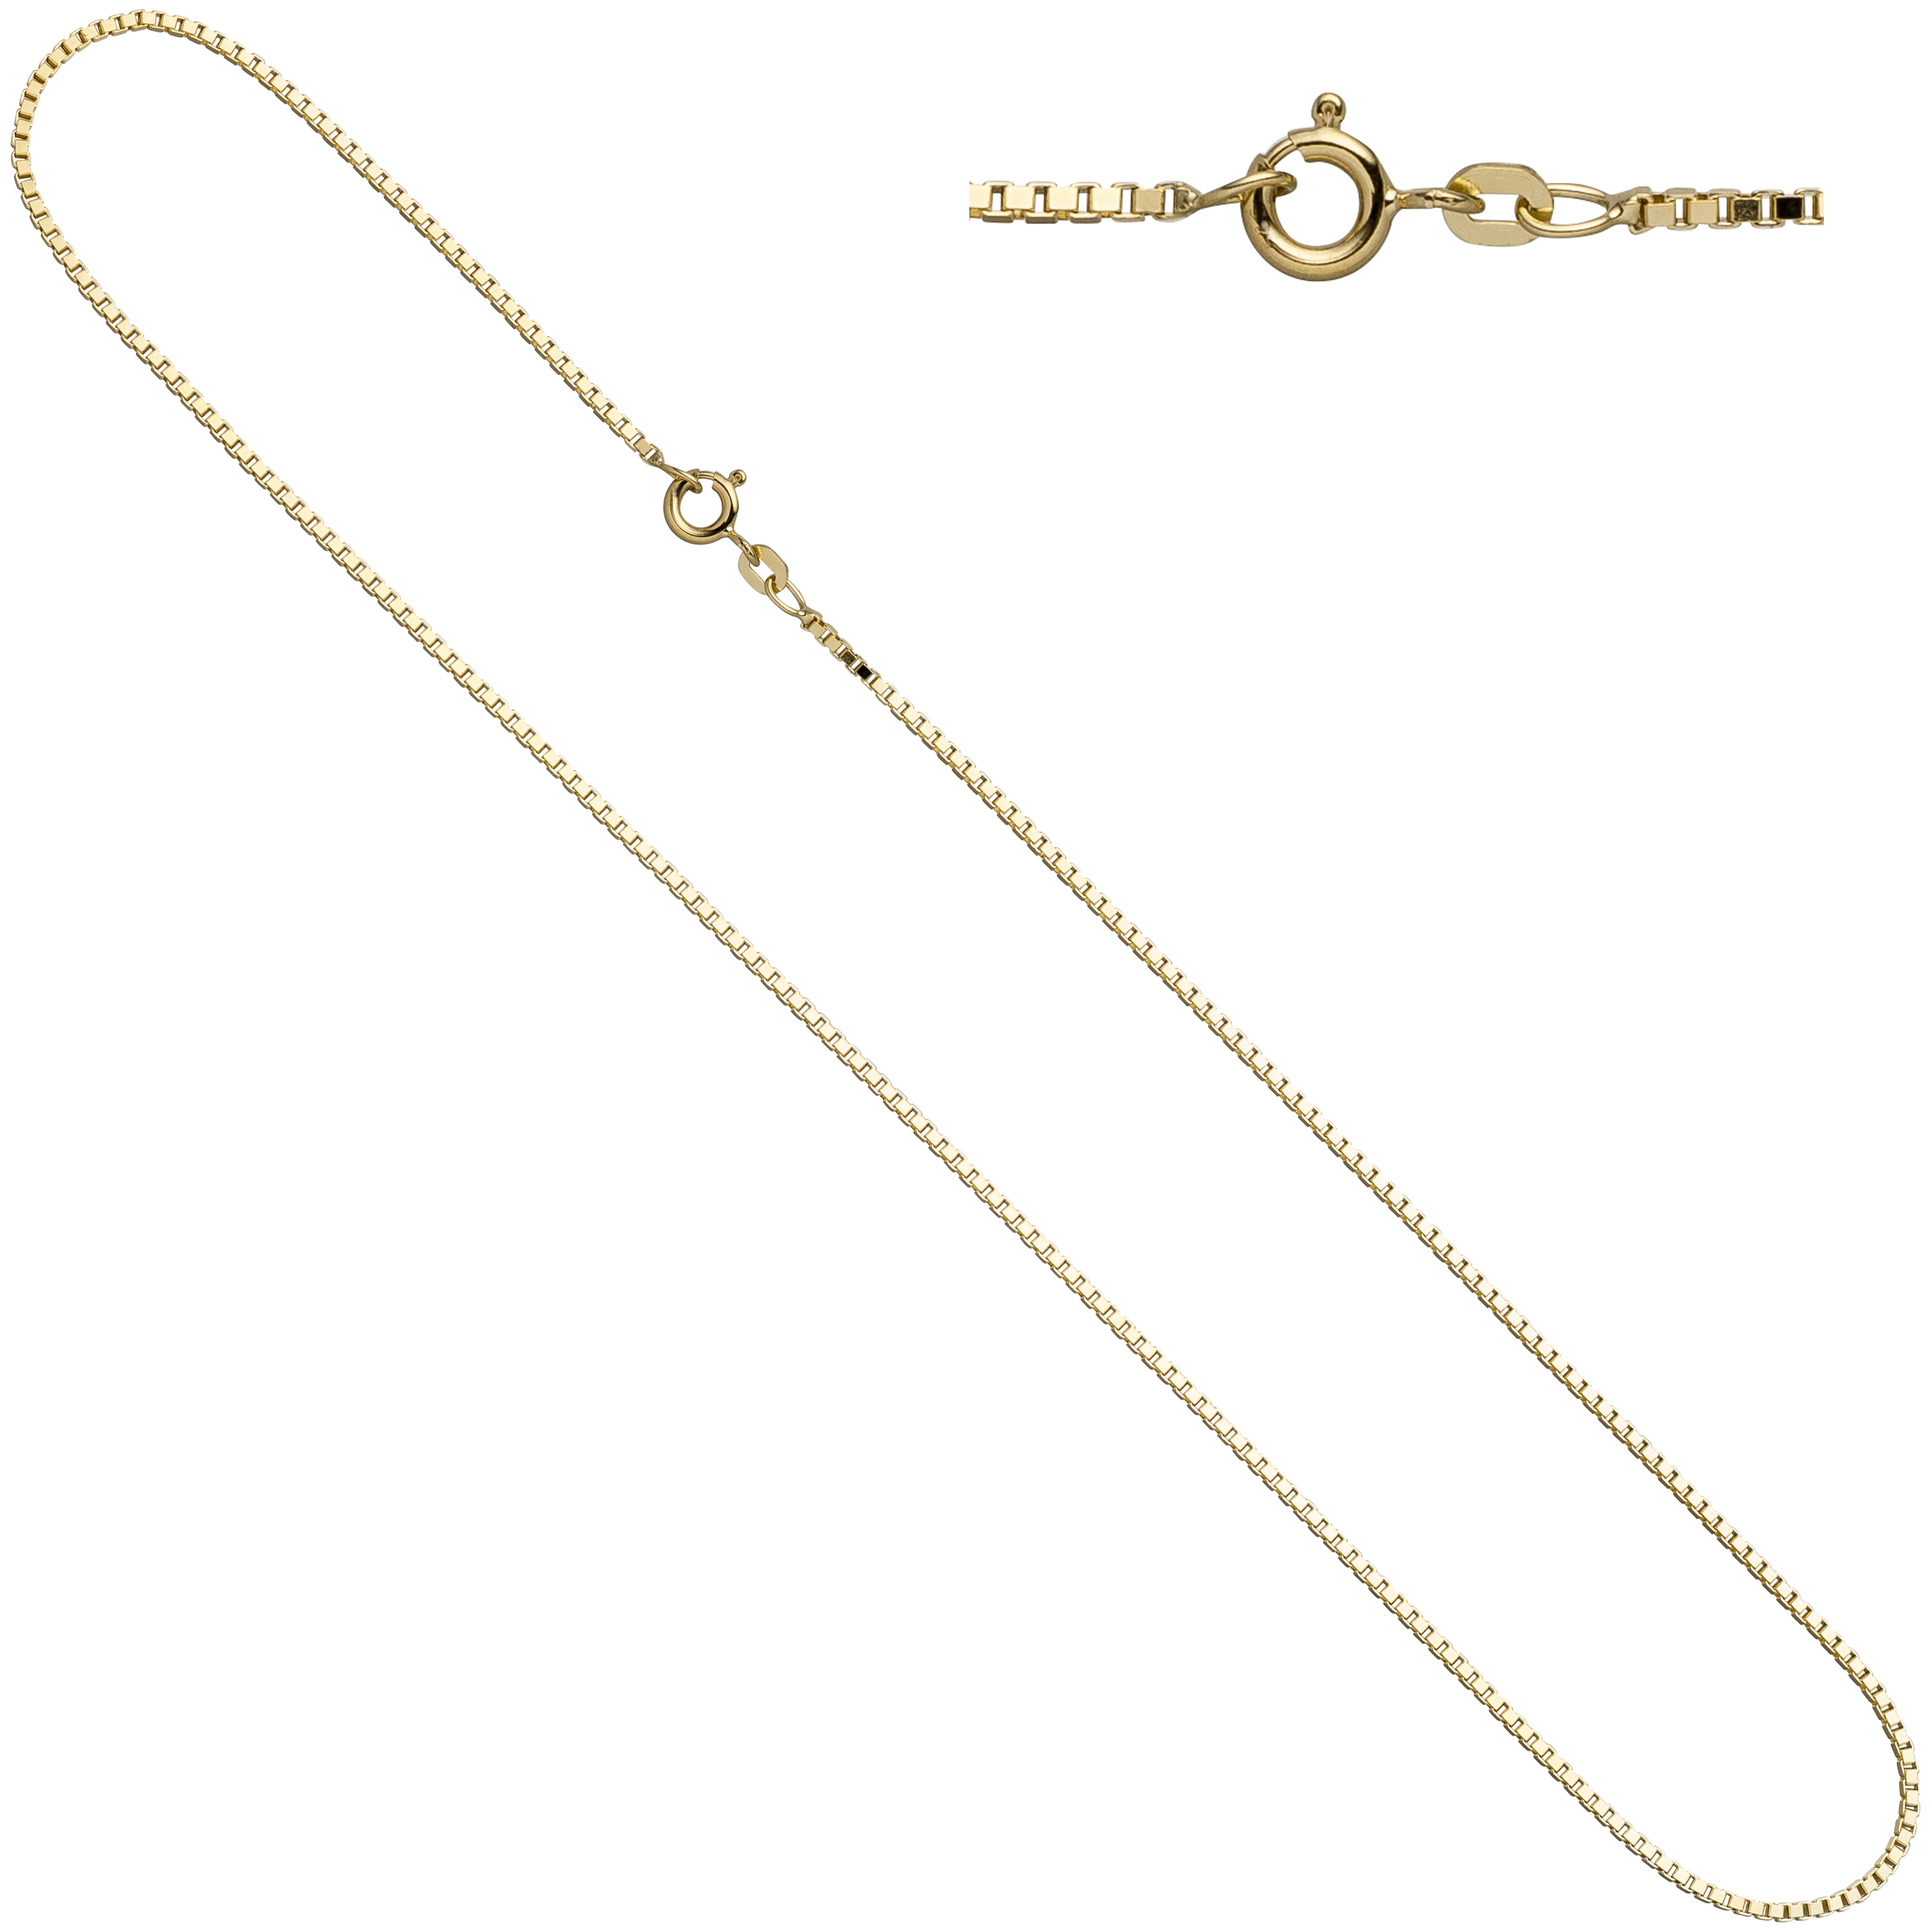 Venezianerkette 333 Gelbgold 1,0 mm 50 cm Gold Kette Halskette Federring